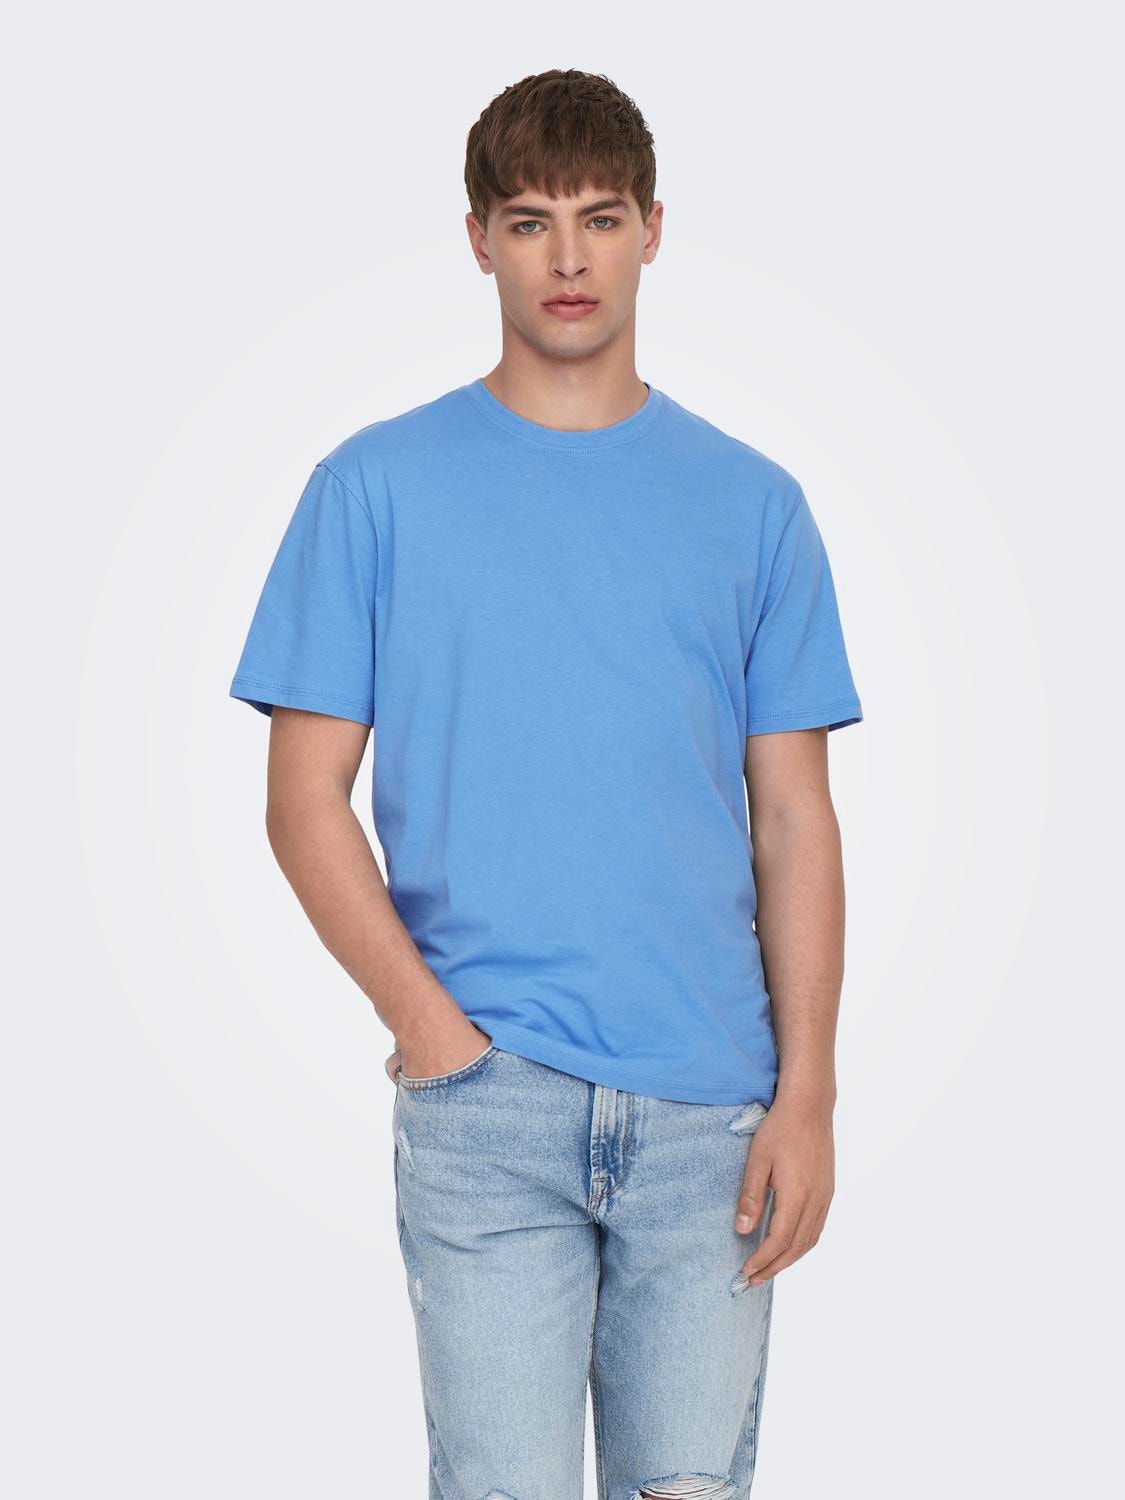 | O-neck SONS® Light & | Blue t-shirt ONLY